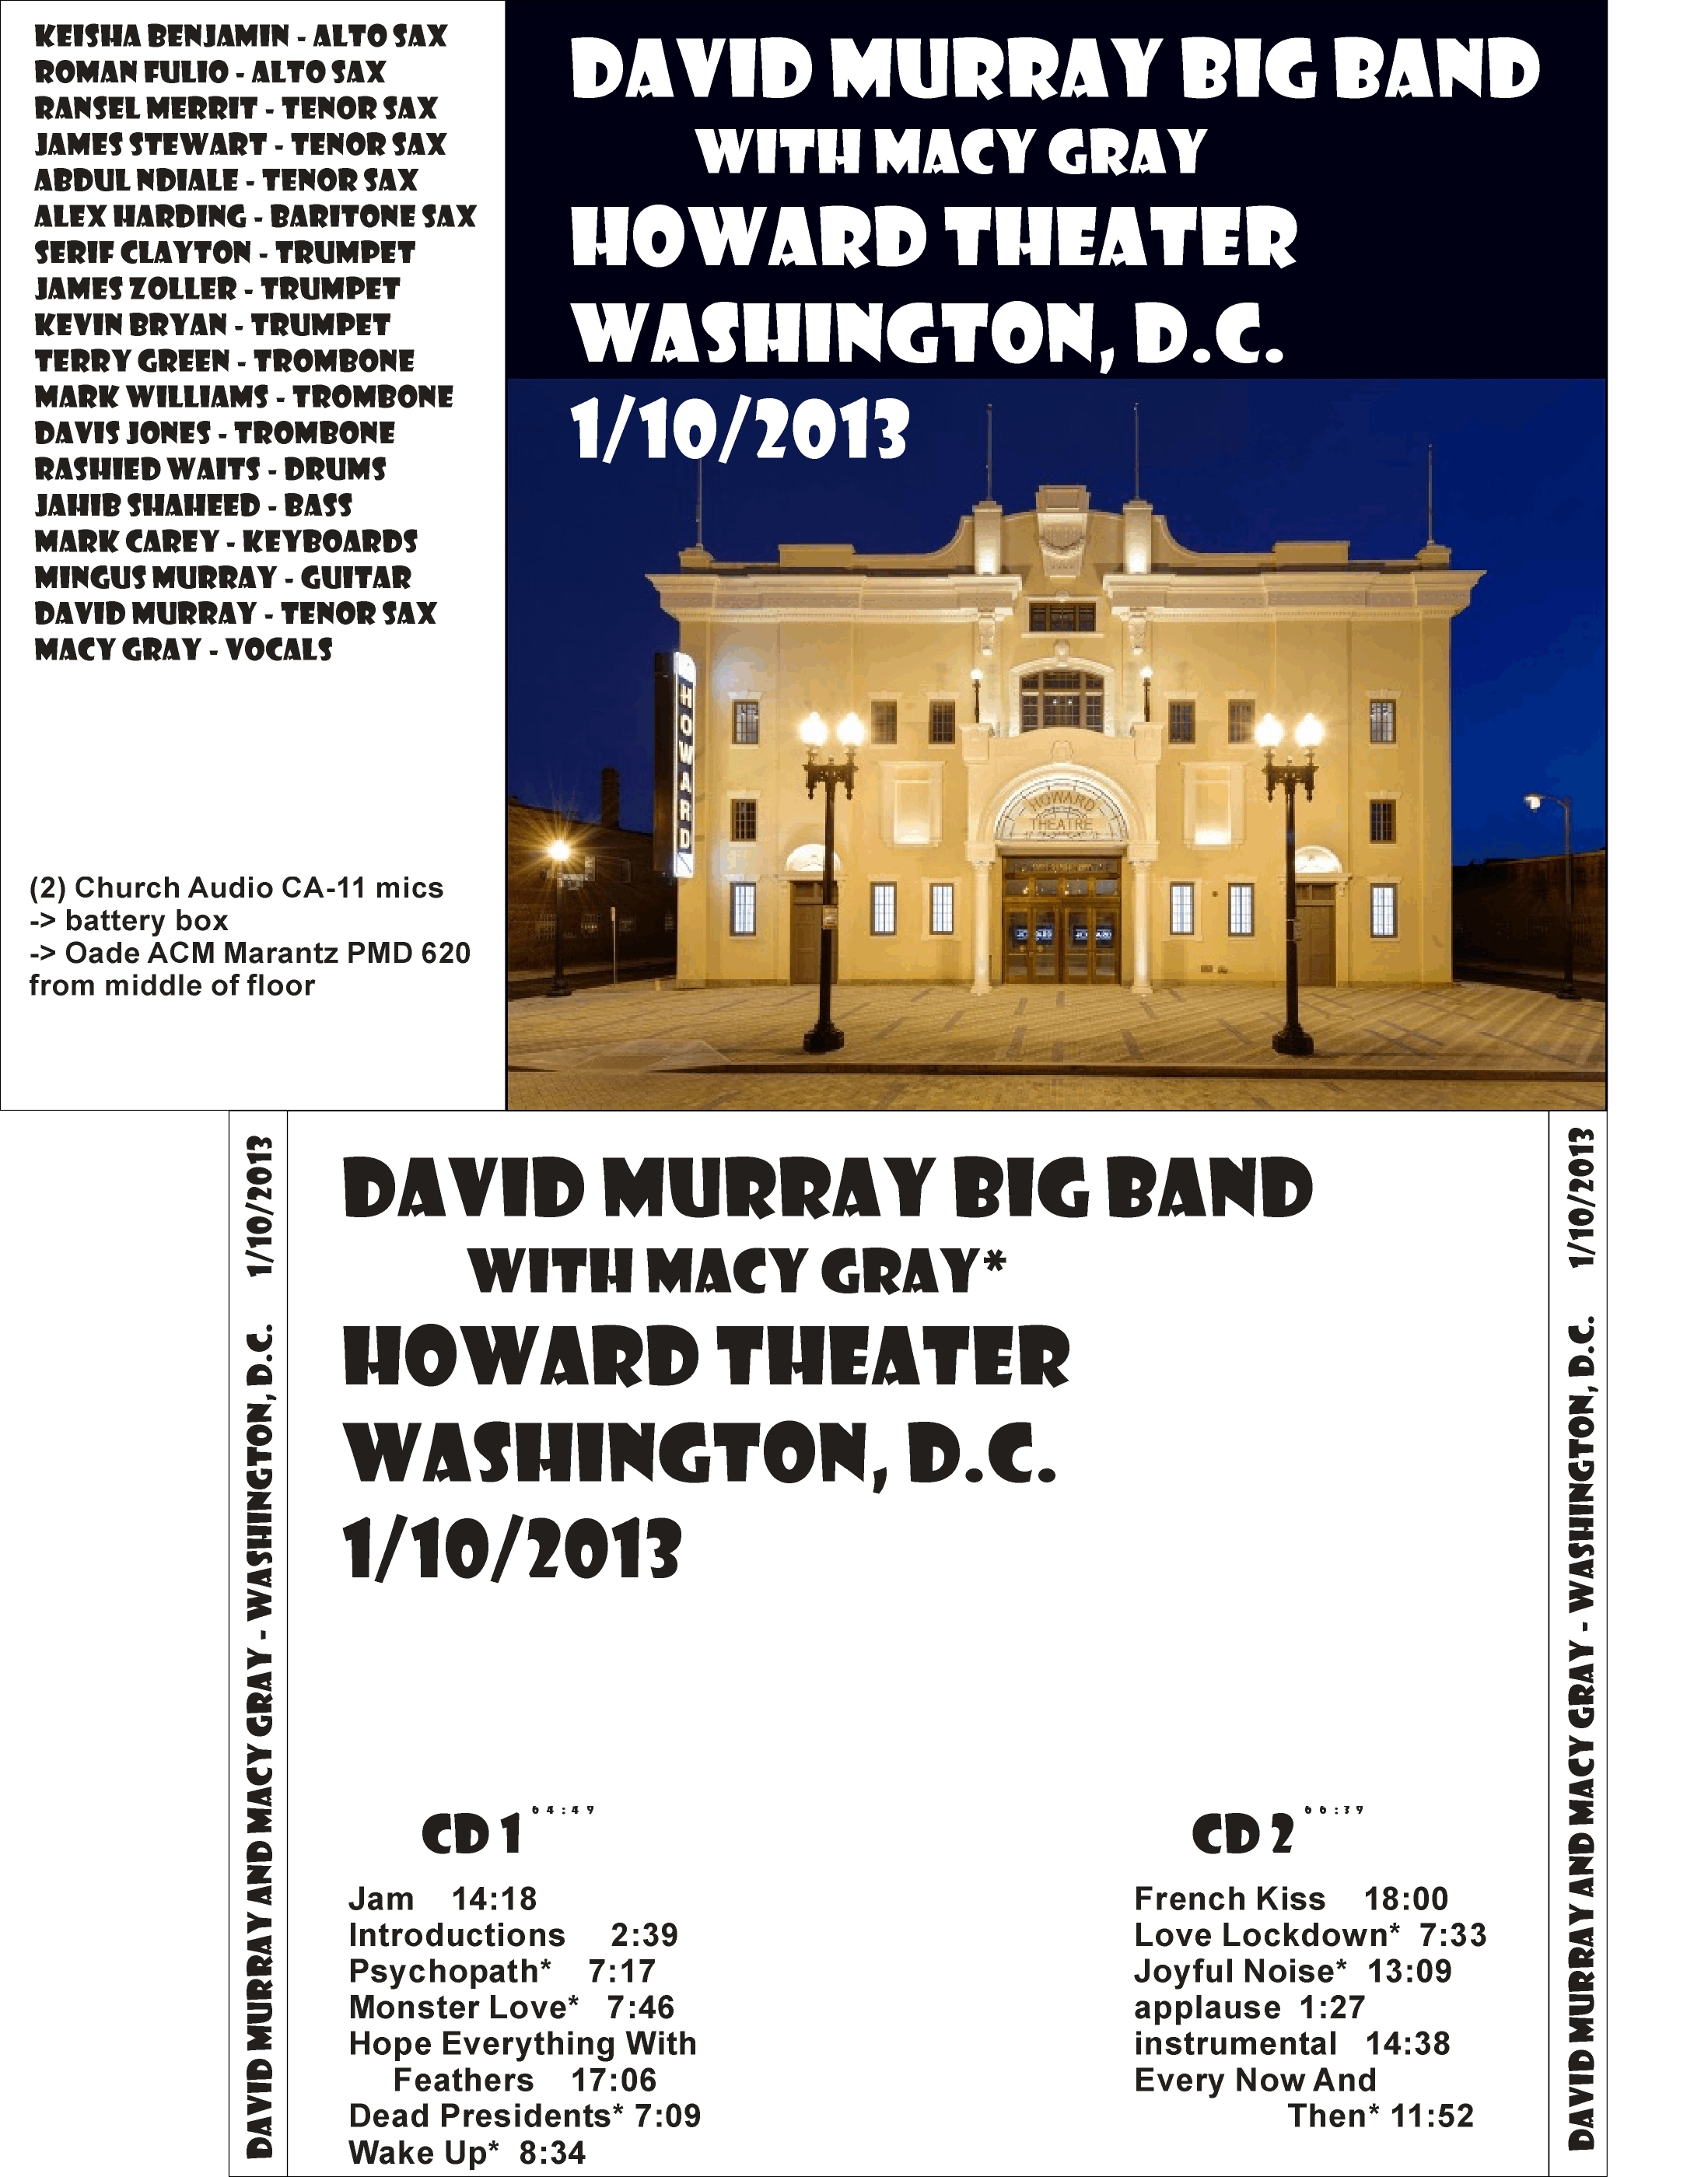 DavidMurrayBigBandMacyGray2013-01-10TheHowardTheaterWashingtonDC.JPG